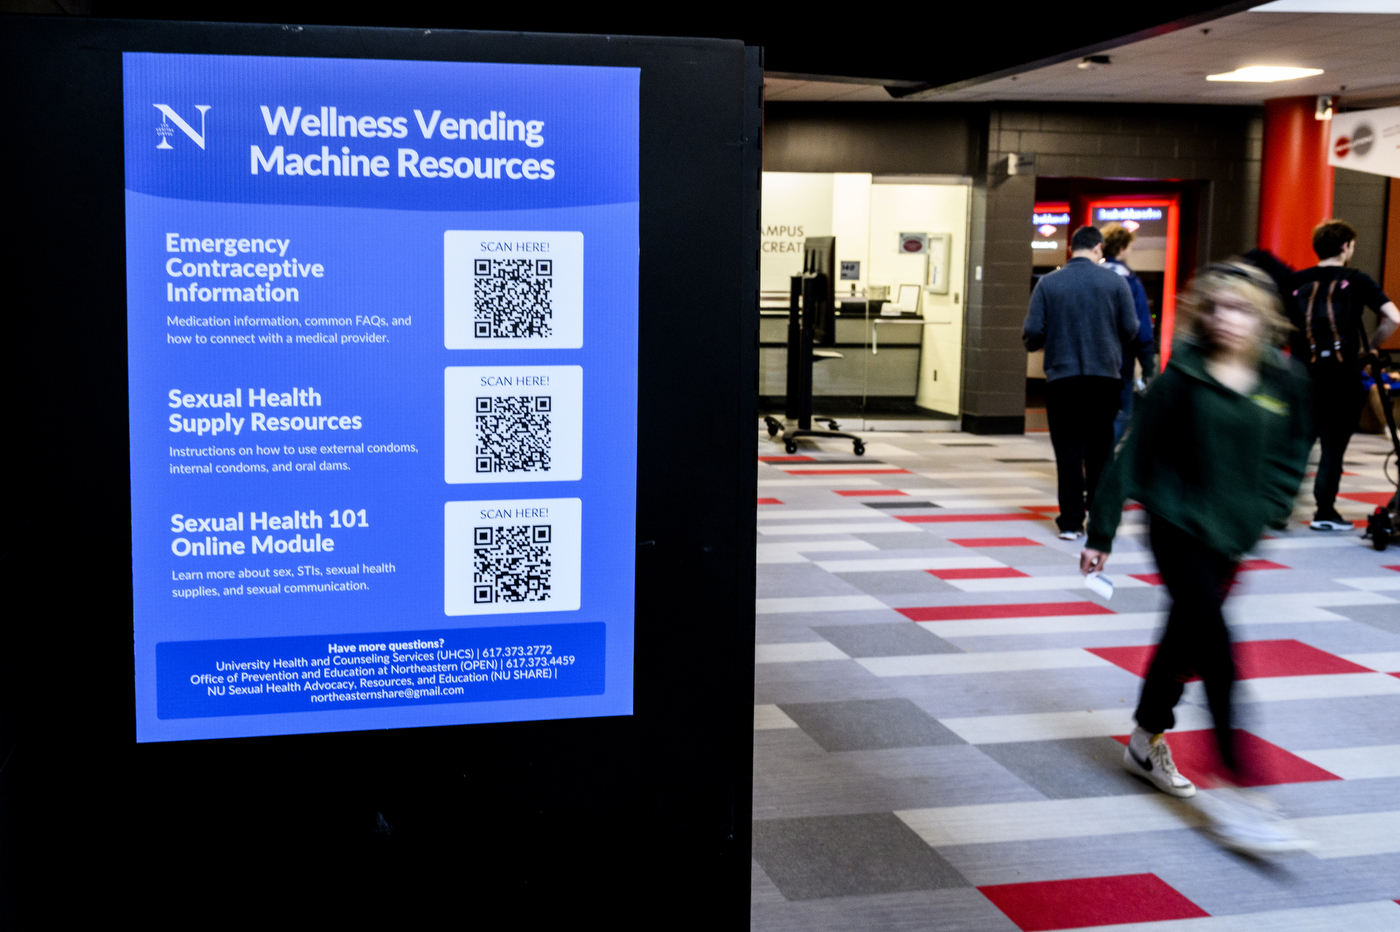 digital board of wellness vending machine resources